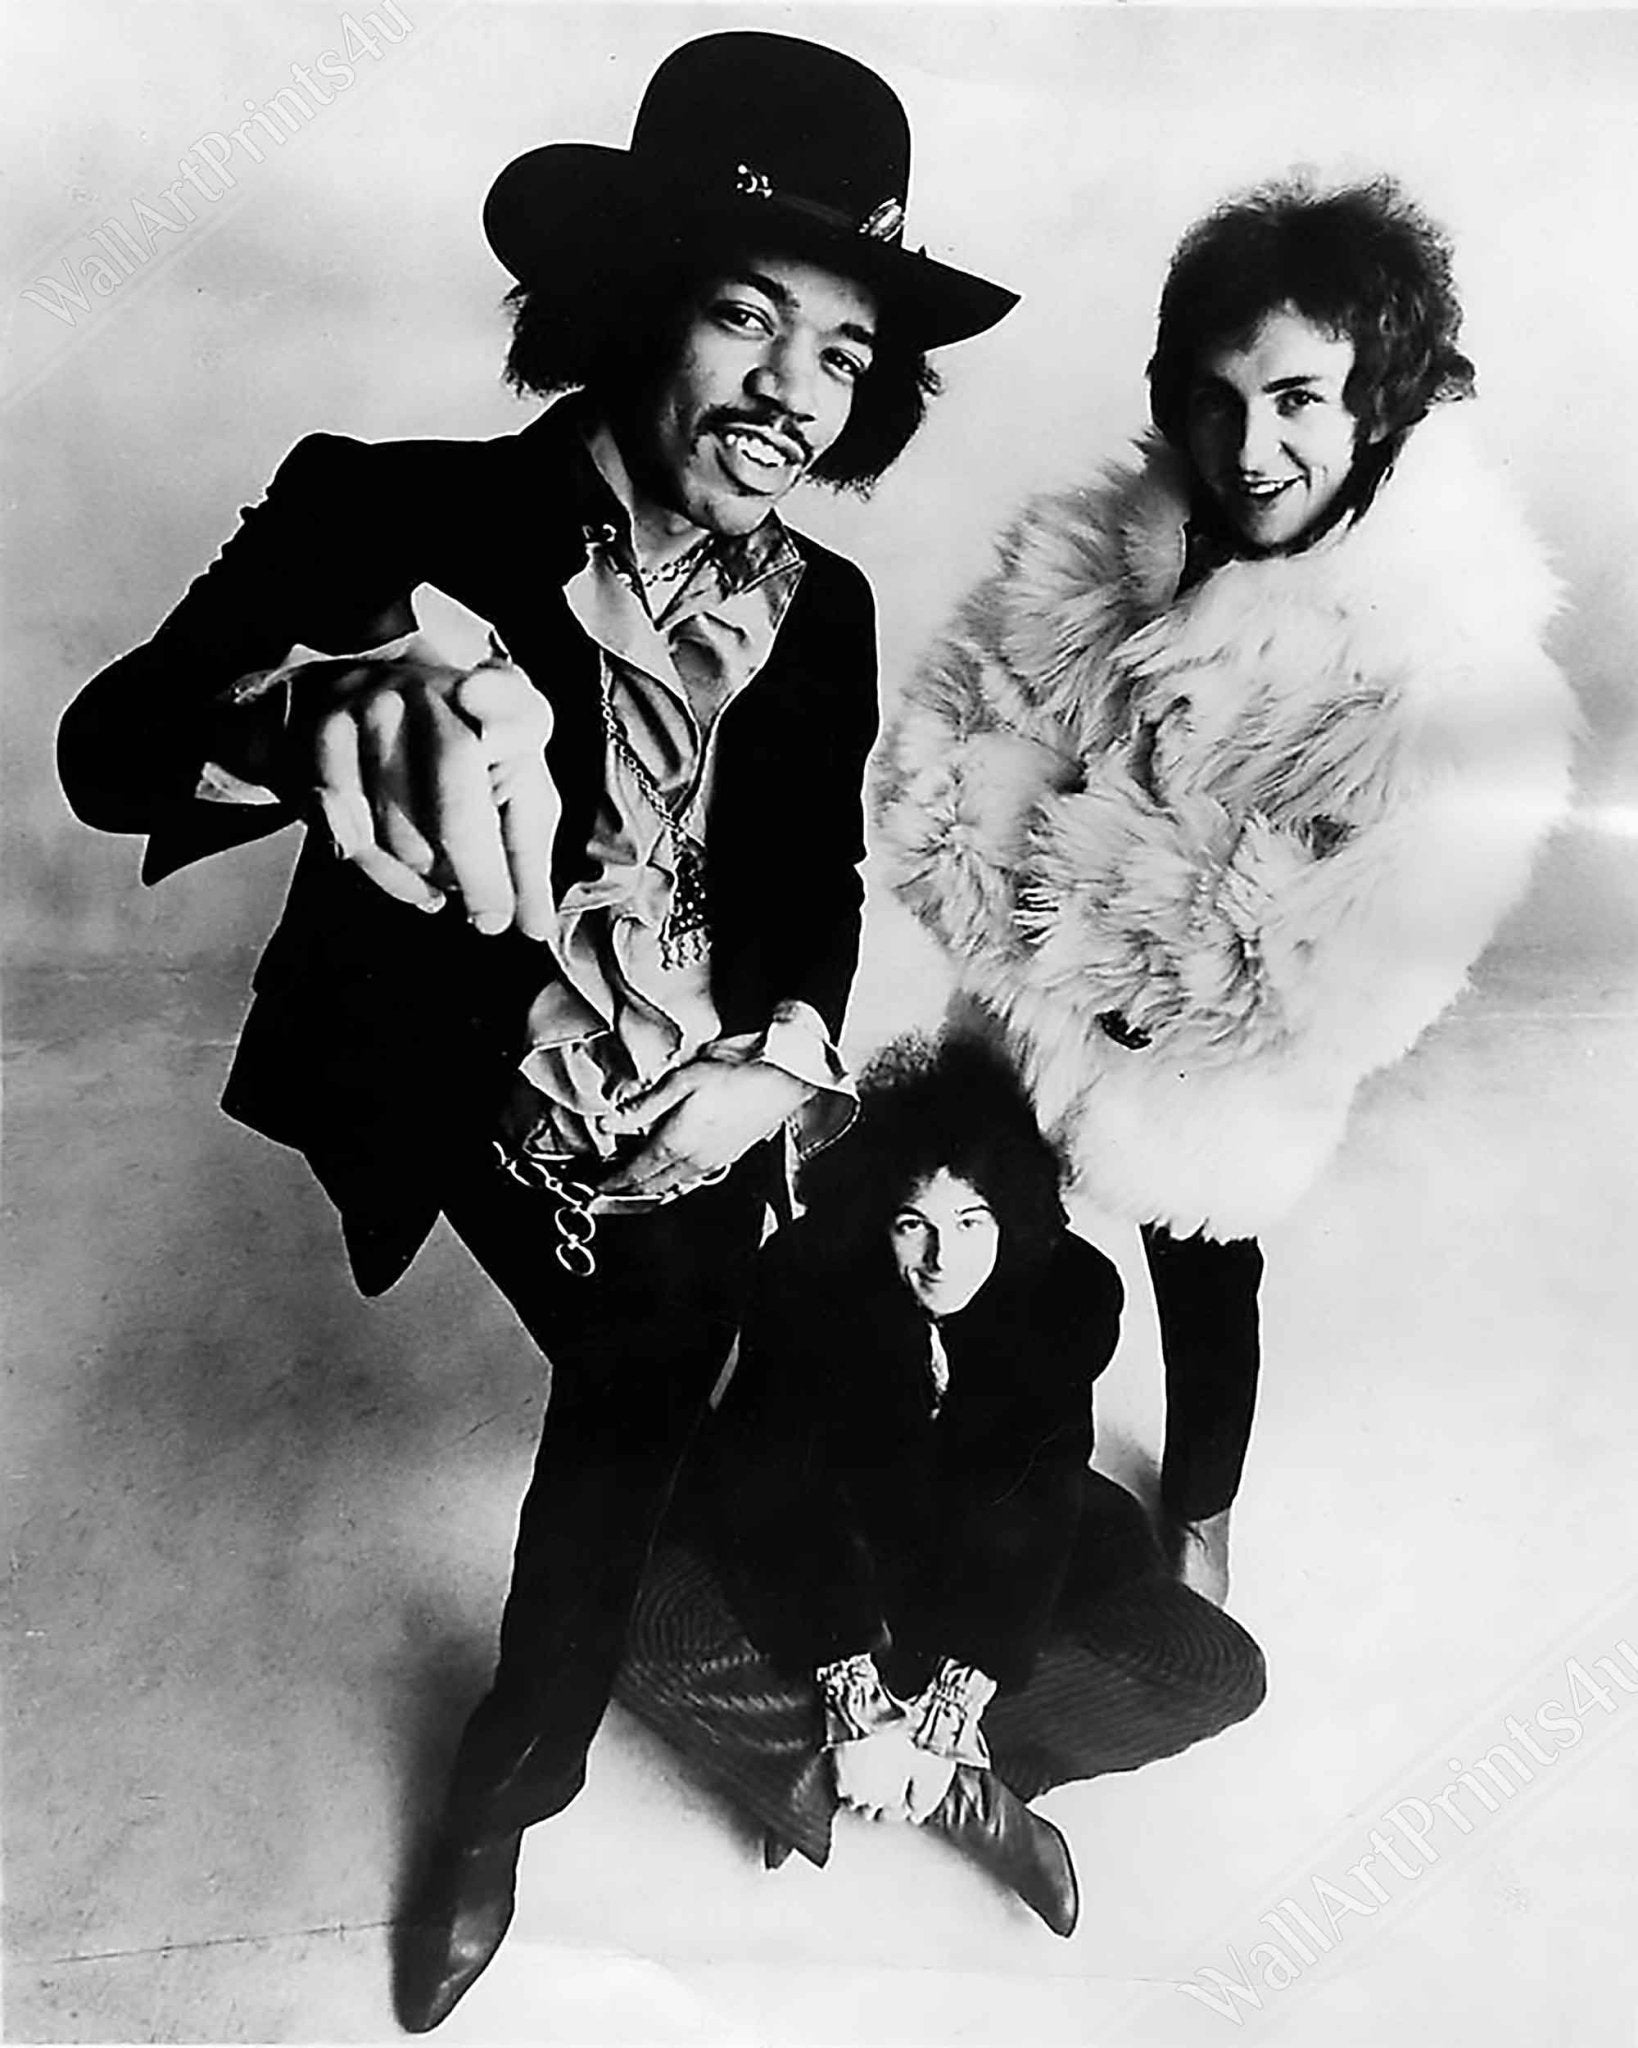 Jimi Hendrix Framed, Jimi Hendrix Experience 1968, Vintage Photo Portrait - Jimi Hendrix Framed Print UK, EU USA Domestic Shipping - WallArtPrints4U